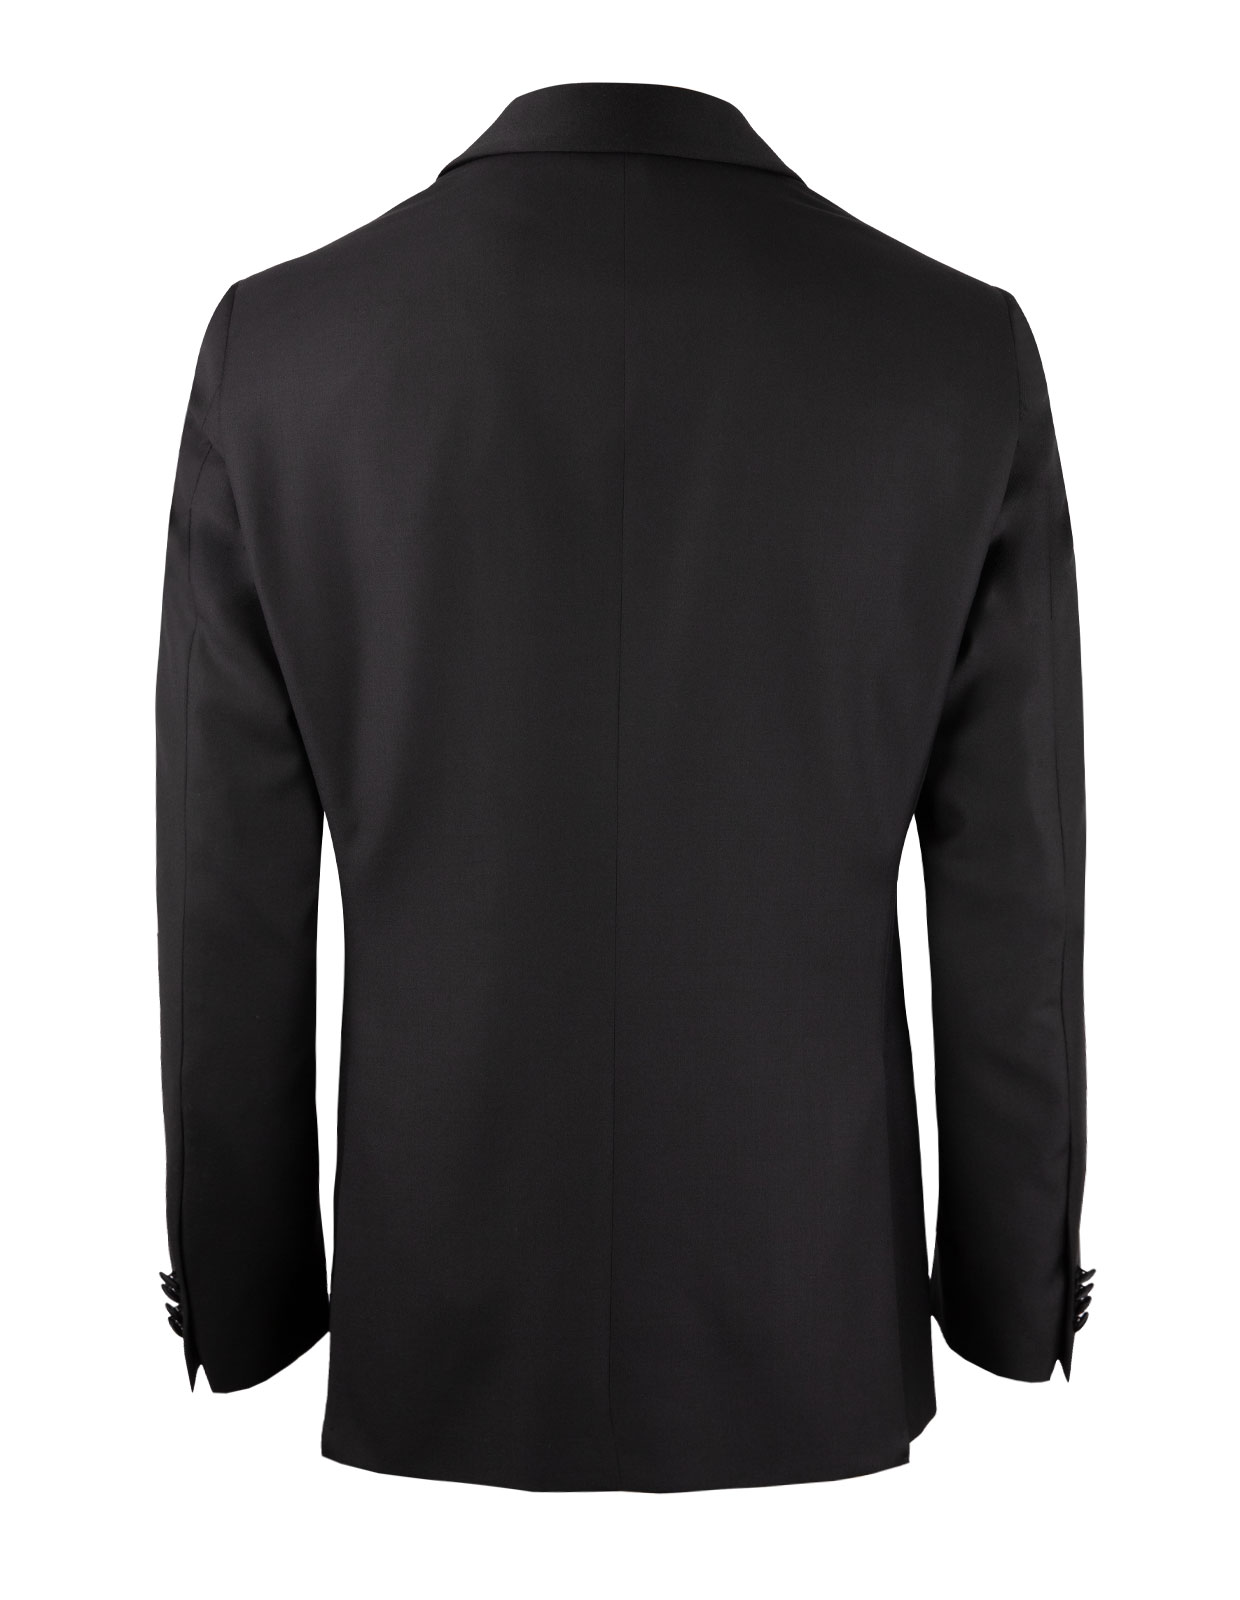 Tuxedo Shawl Jacket Mix & Match Black Stl 152